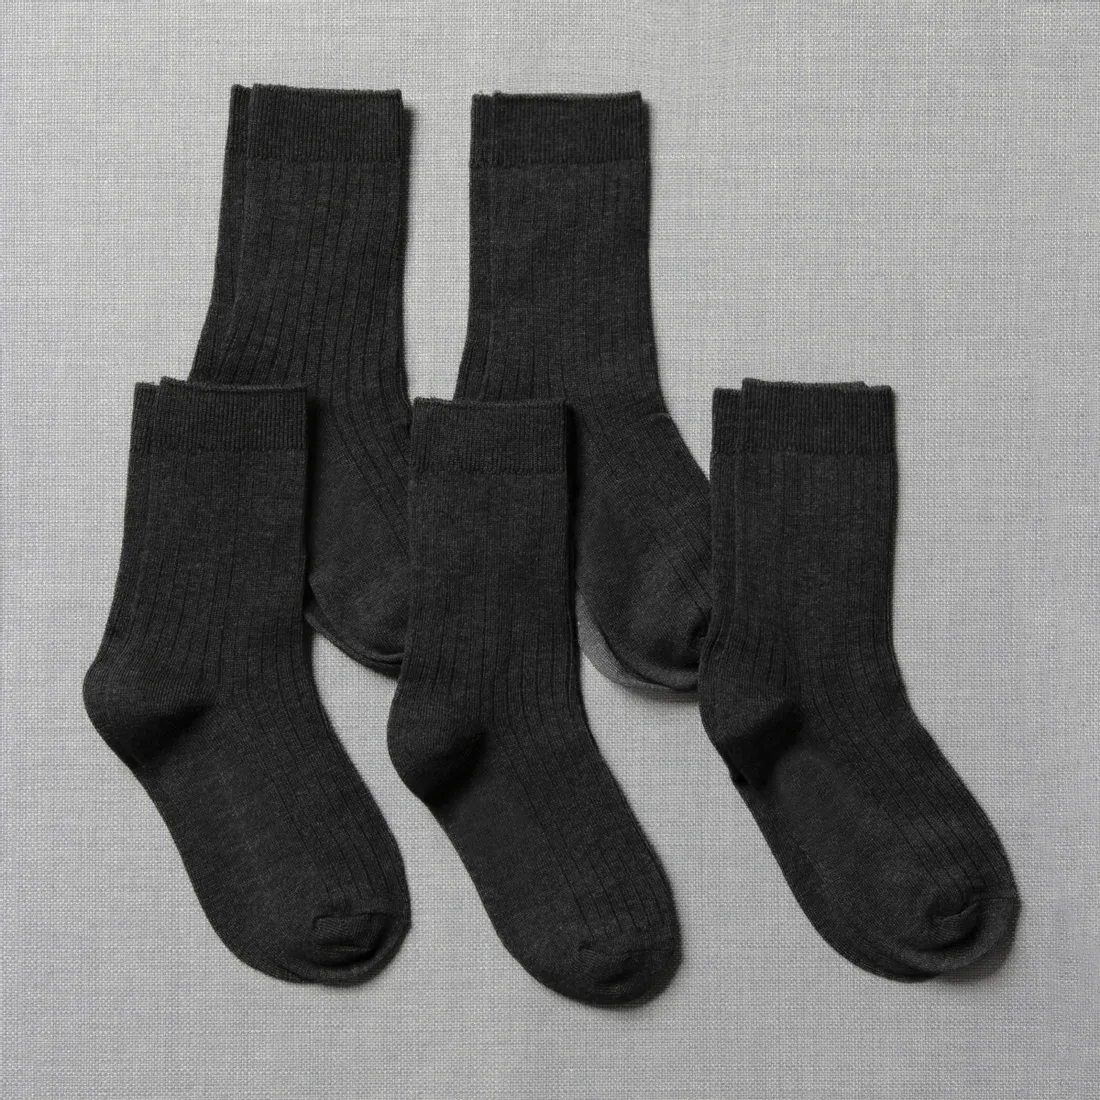 5 Pack anklet socks grey - Kids's School clothes | Ackermans